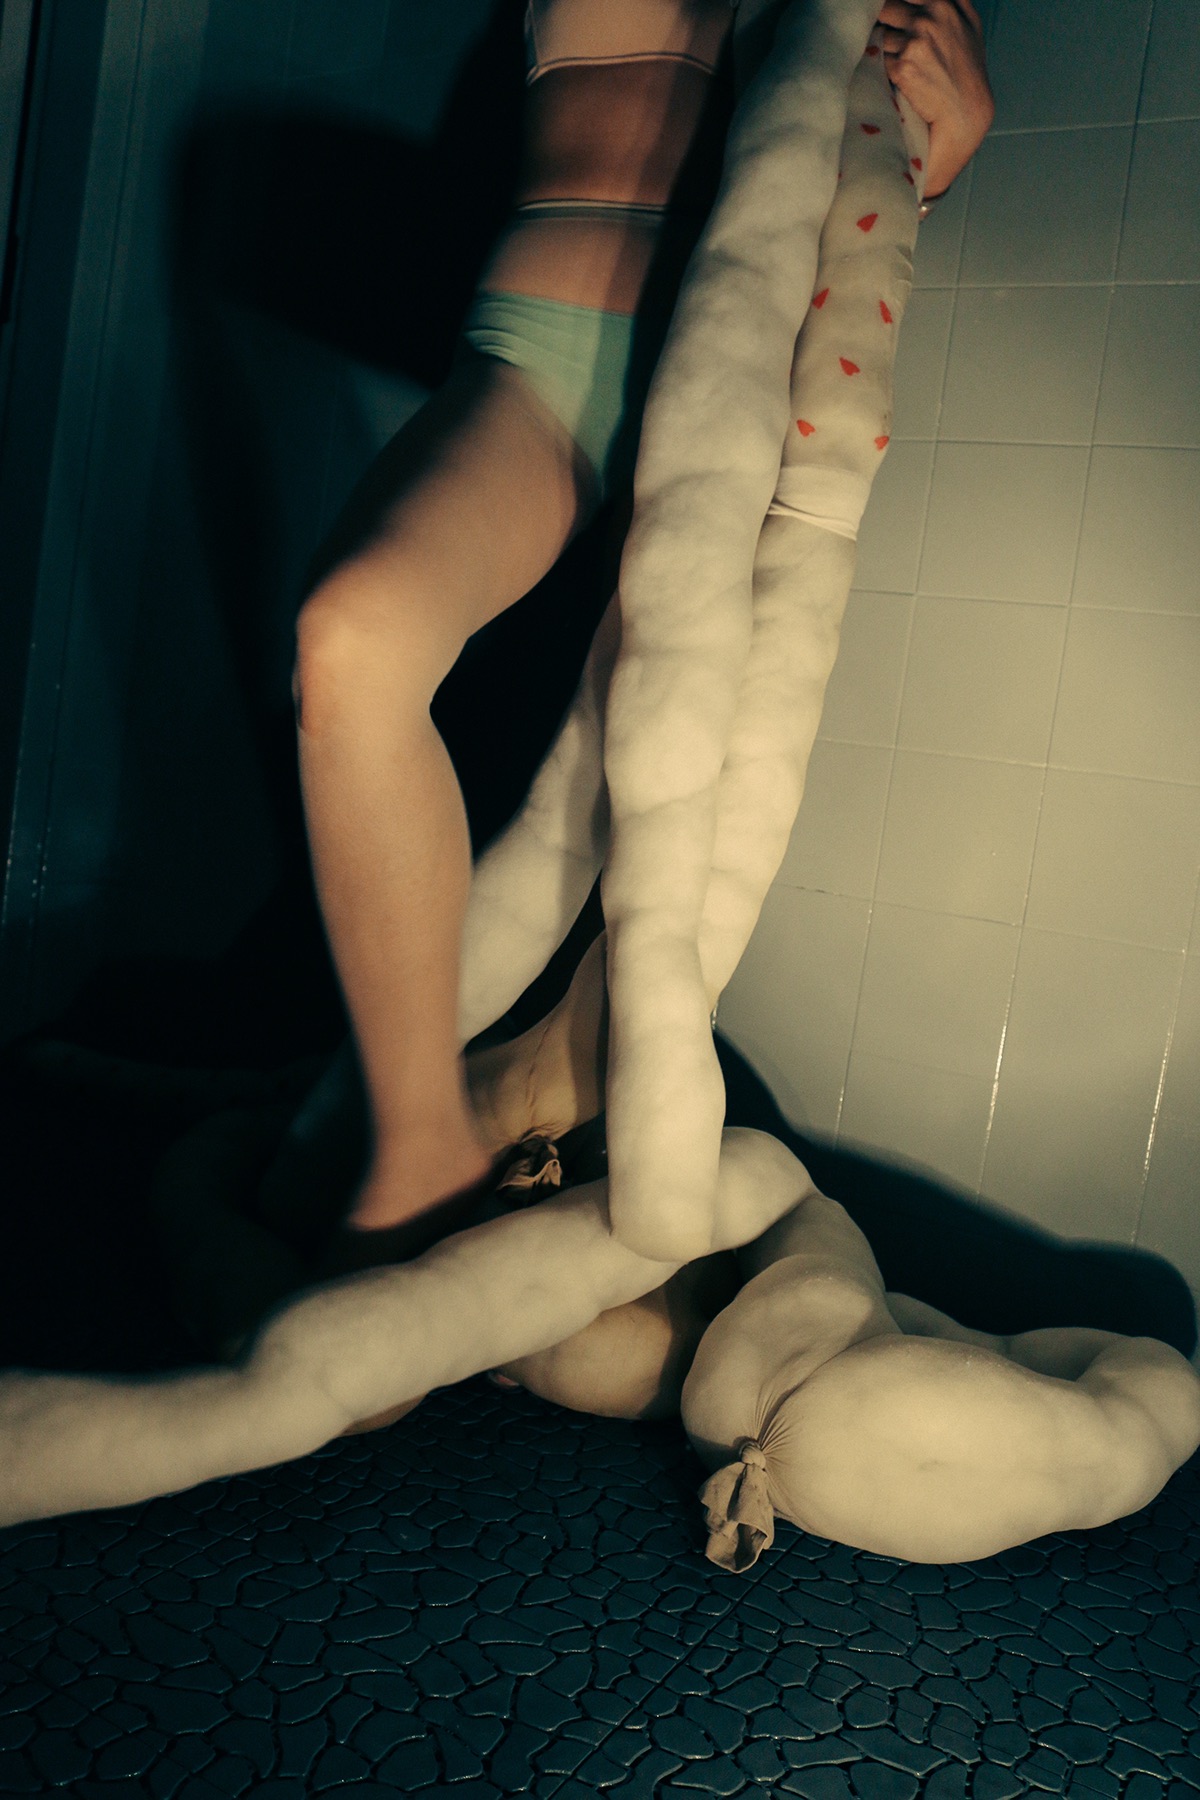 soft sculpture sexual exploitation manipulation toilet